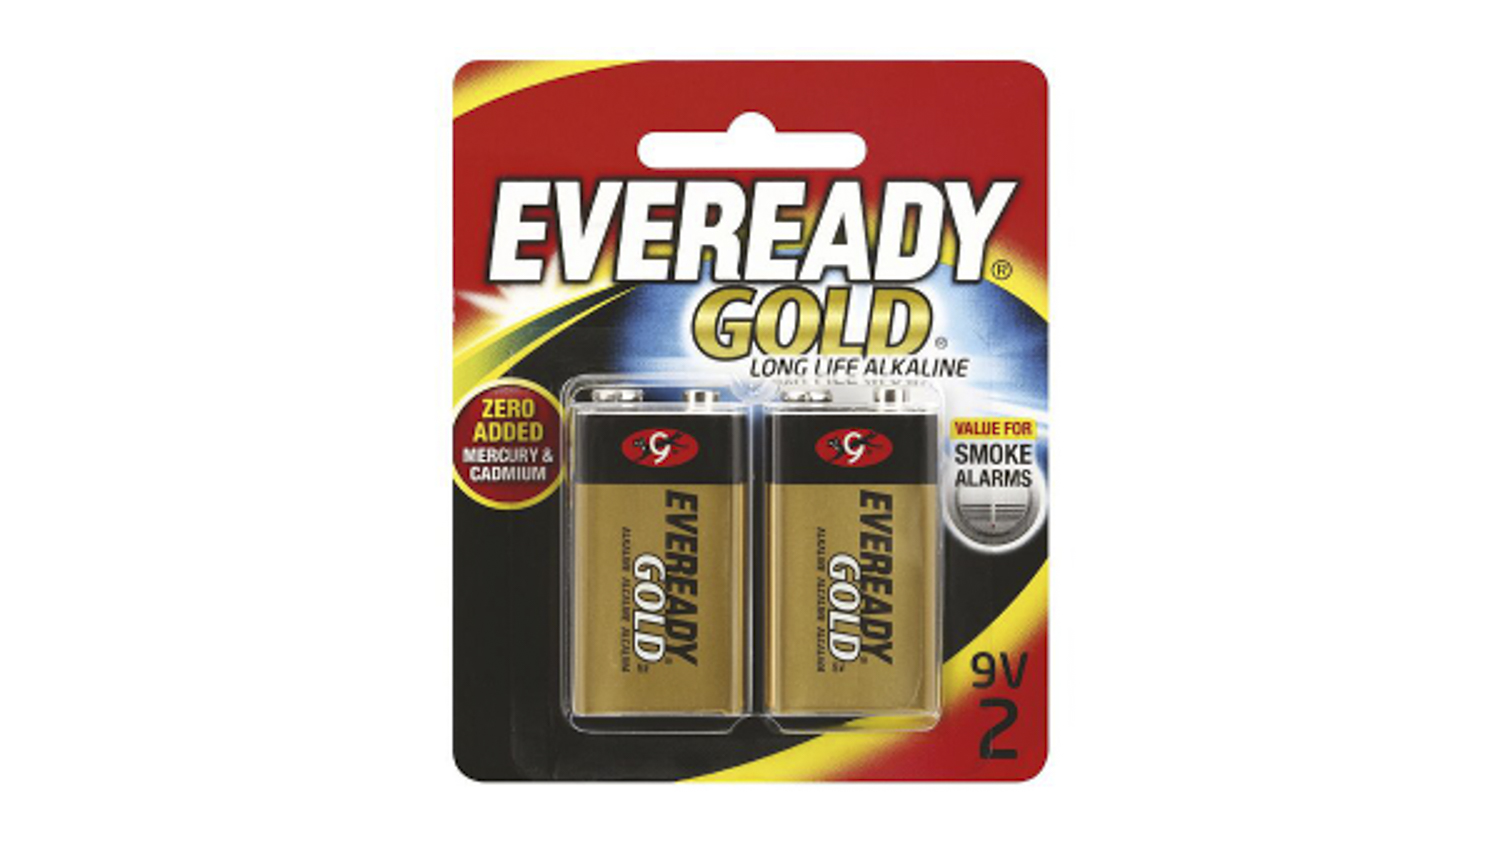 Eveready Gold (9V) carousel image